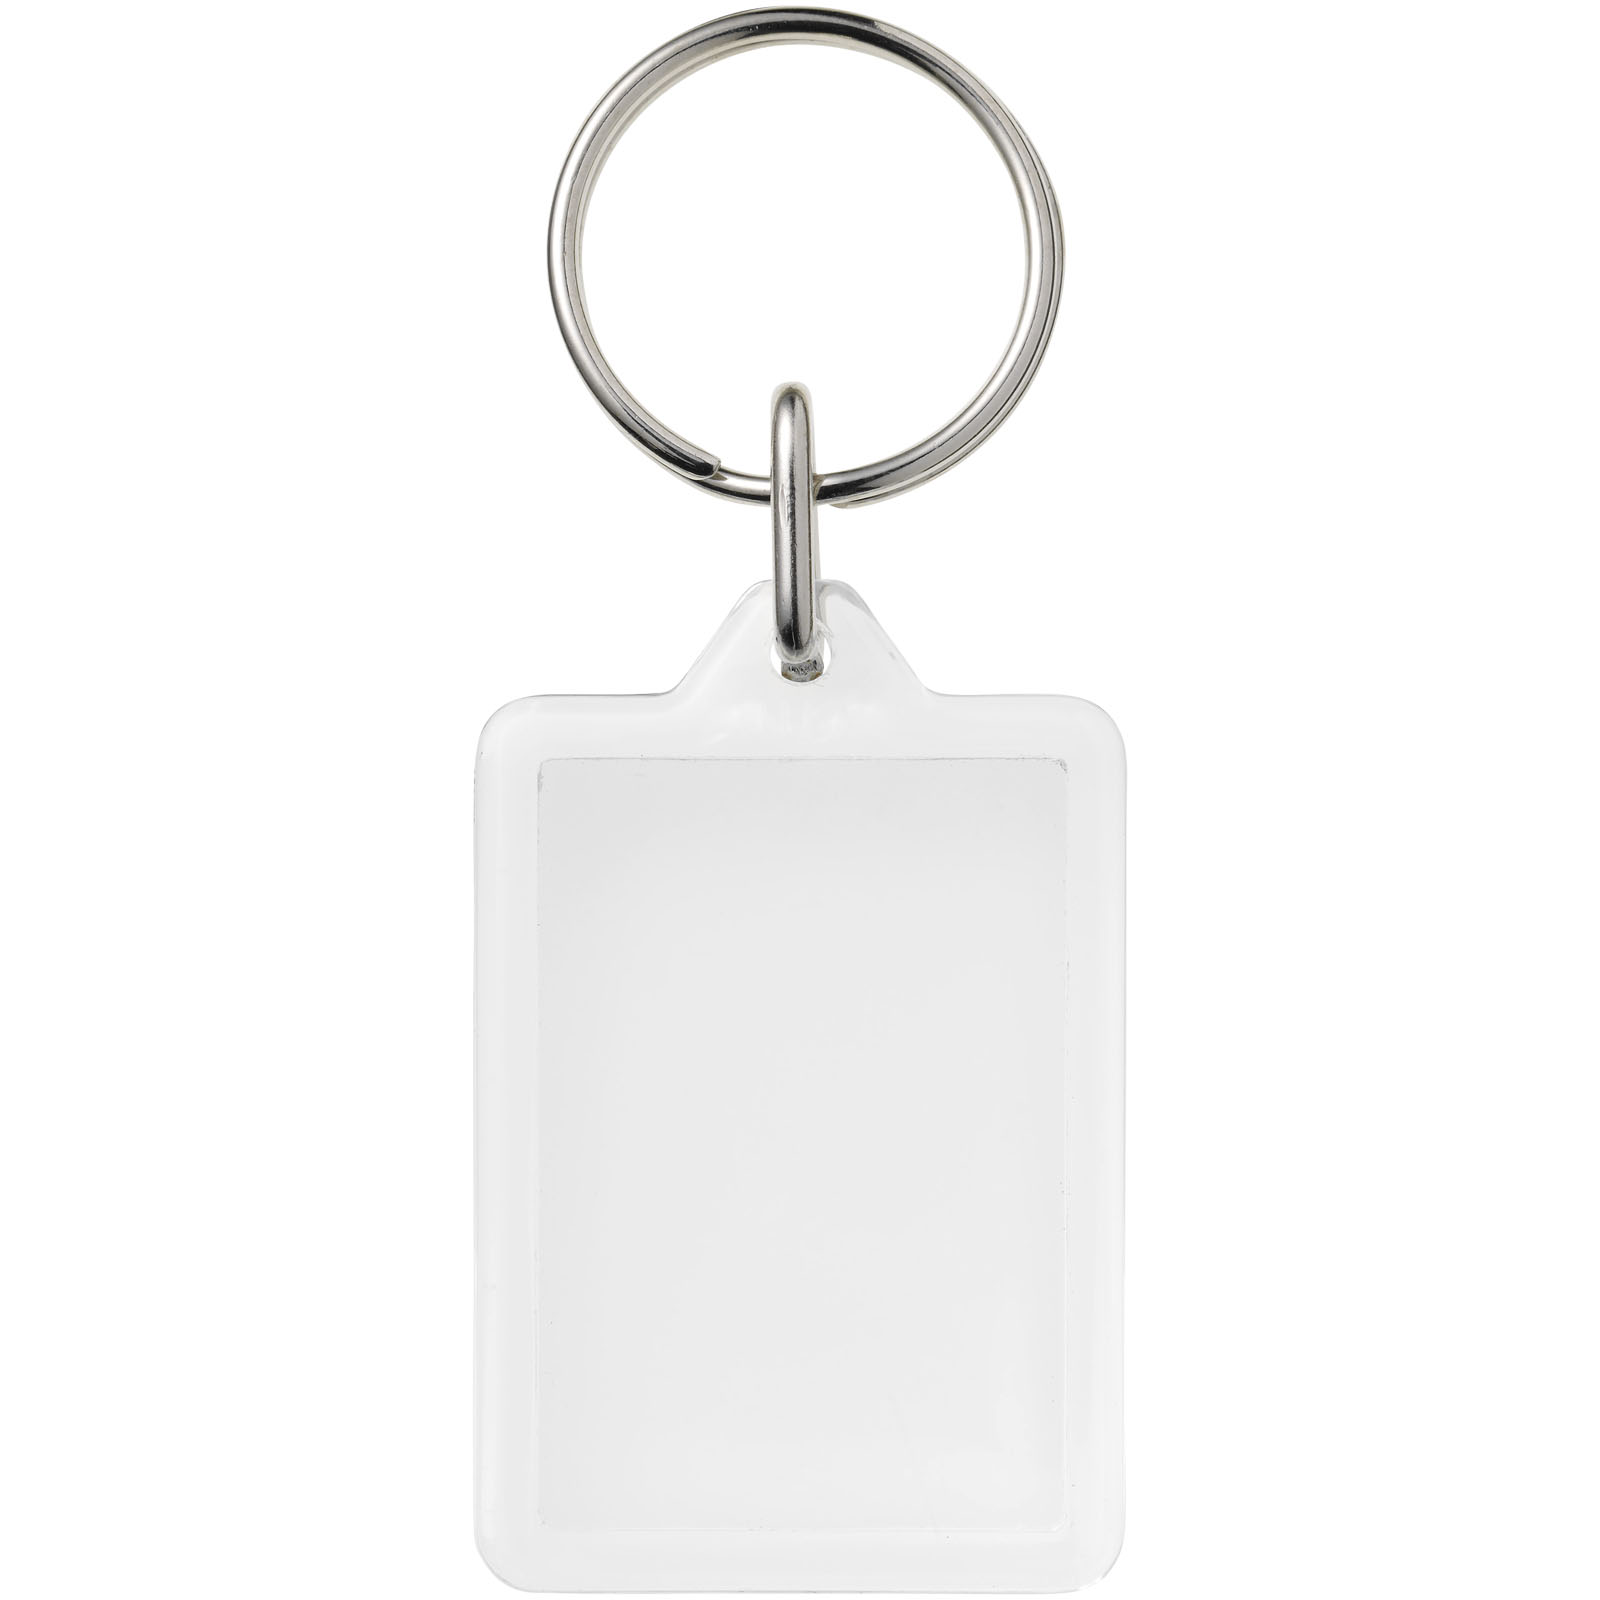 Advertising Keychains & Keyrings - Midi Y1 compact keychain - 1